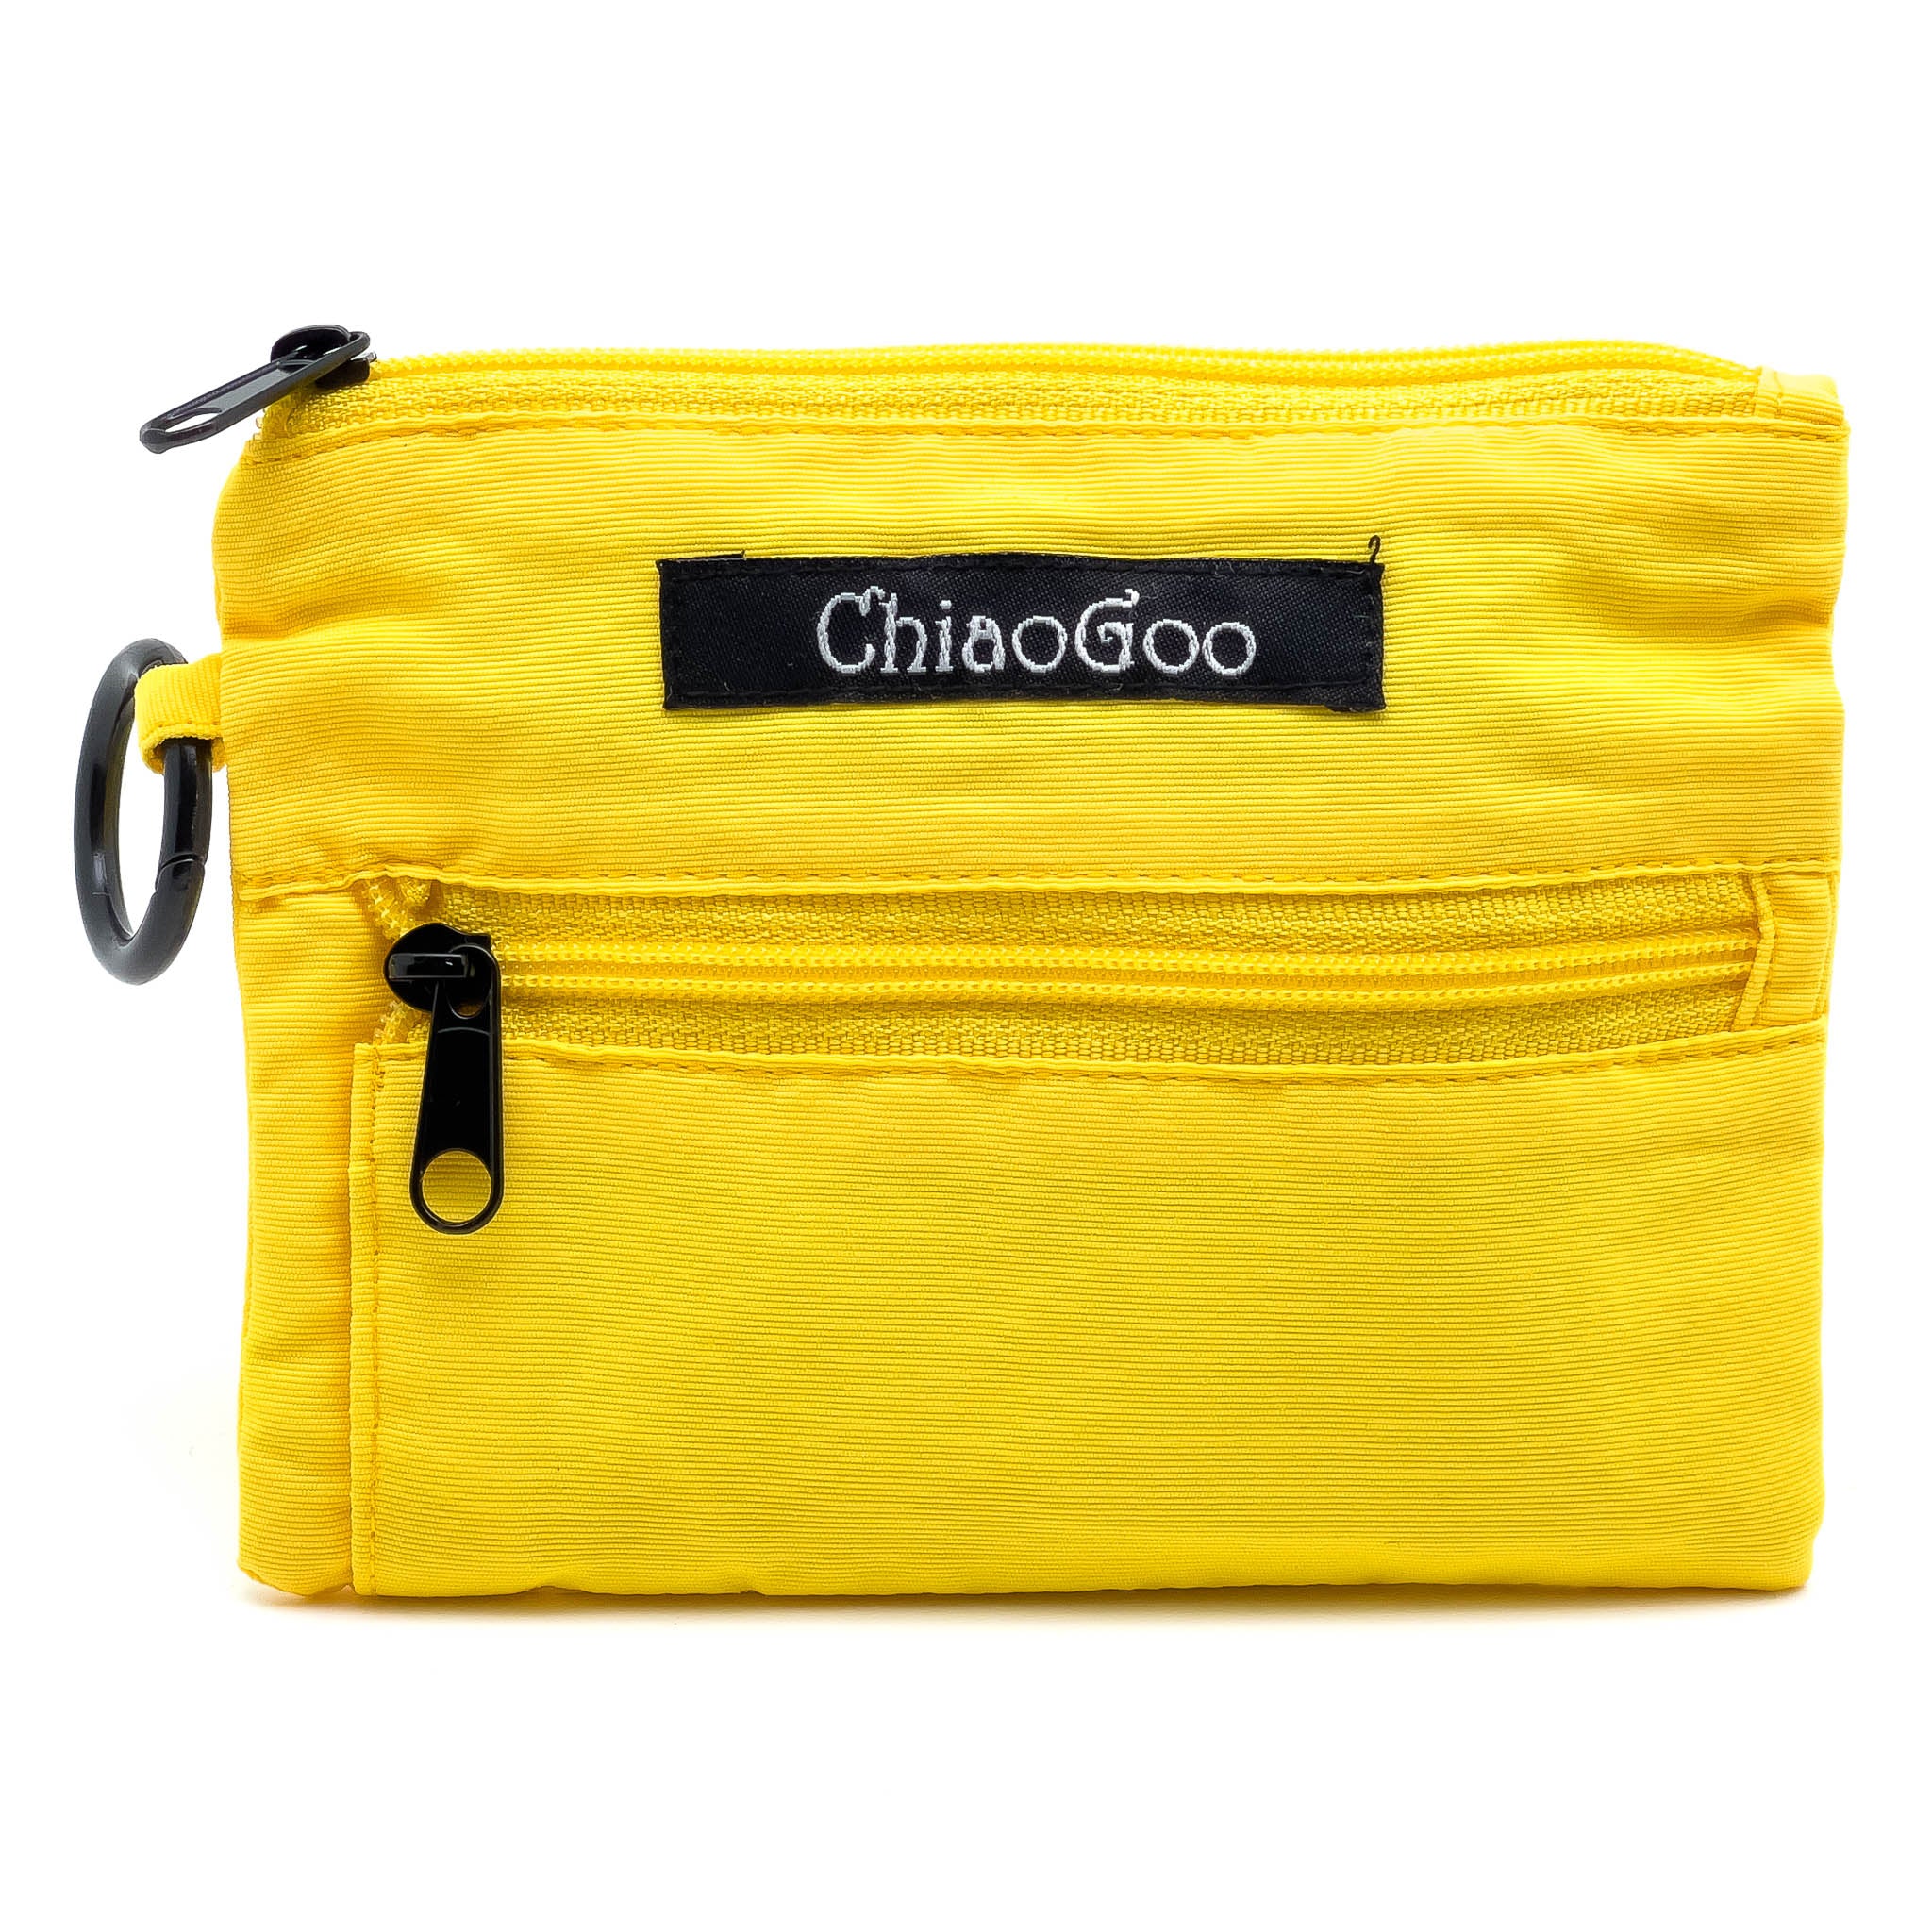 ChiaoGoo Twist Tip Interchangeable Knitting Needles Review